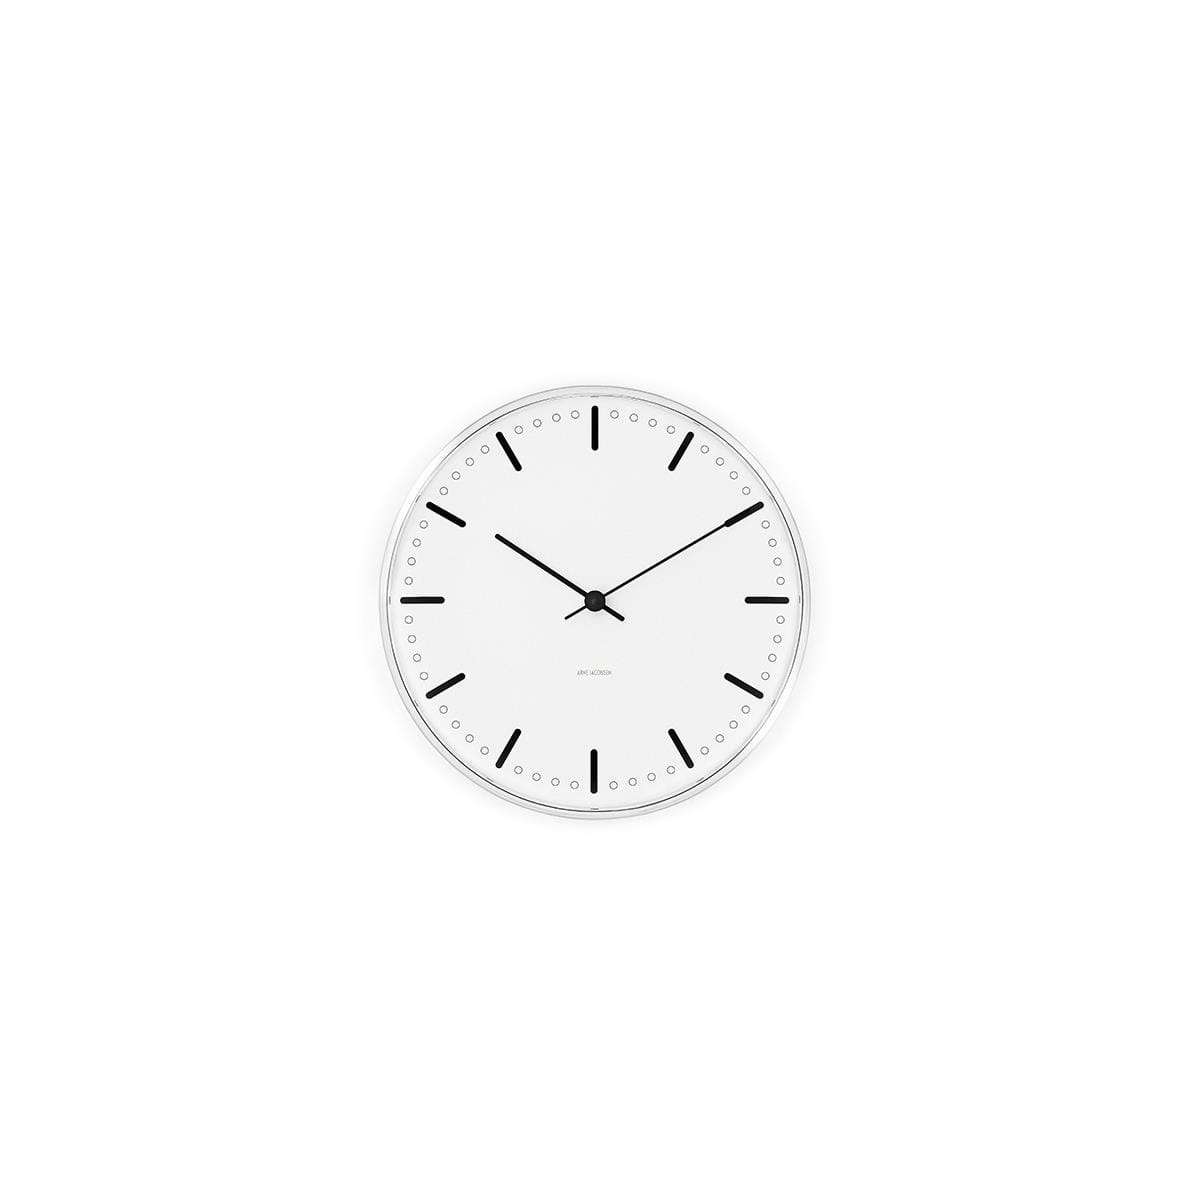 Arne Jacobsen - City Hall Wall Clock 16,5 cm - White (43621)